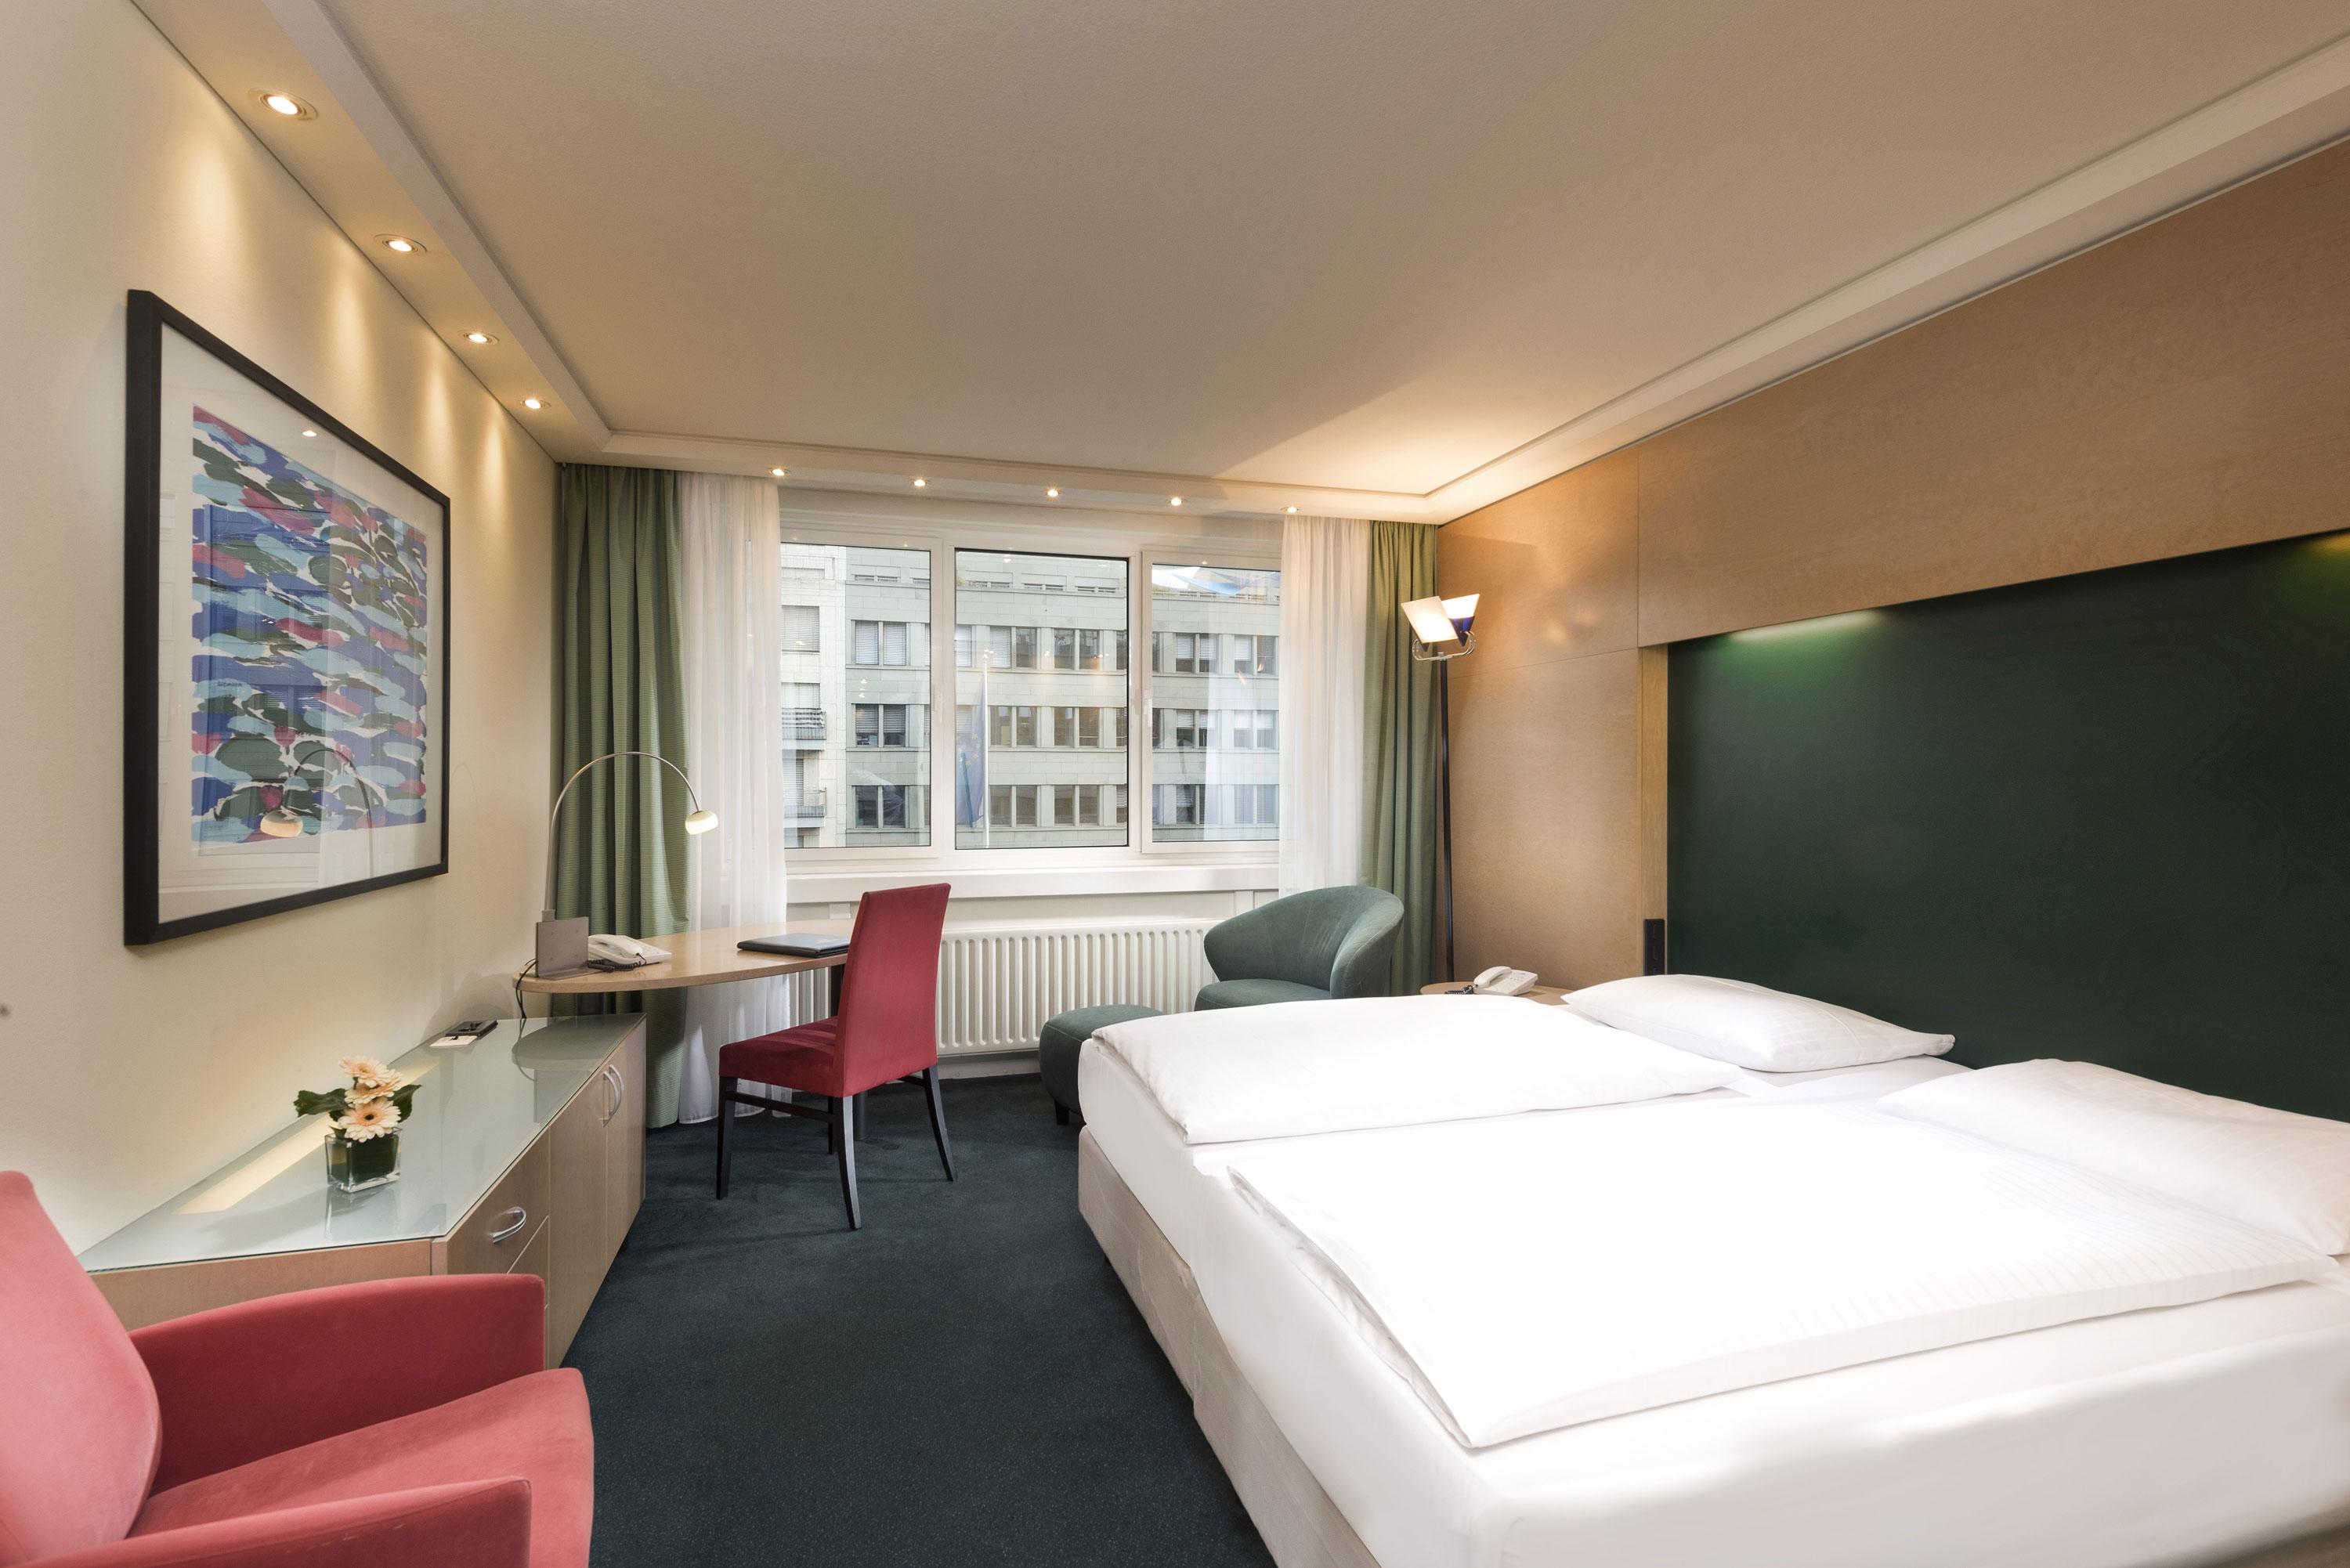 Maritim proArte Hotel Berlin